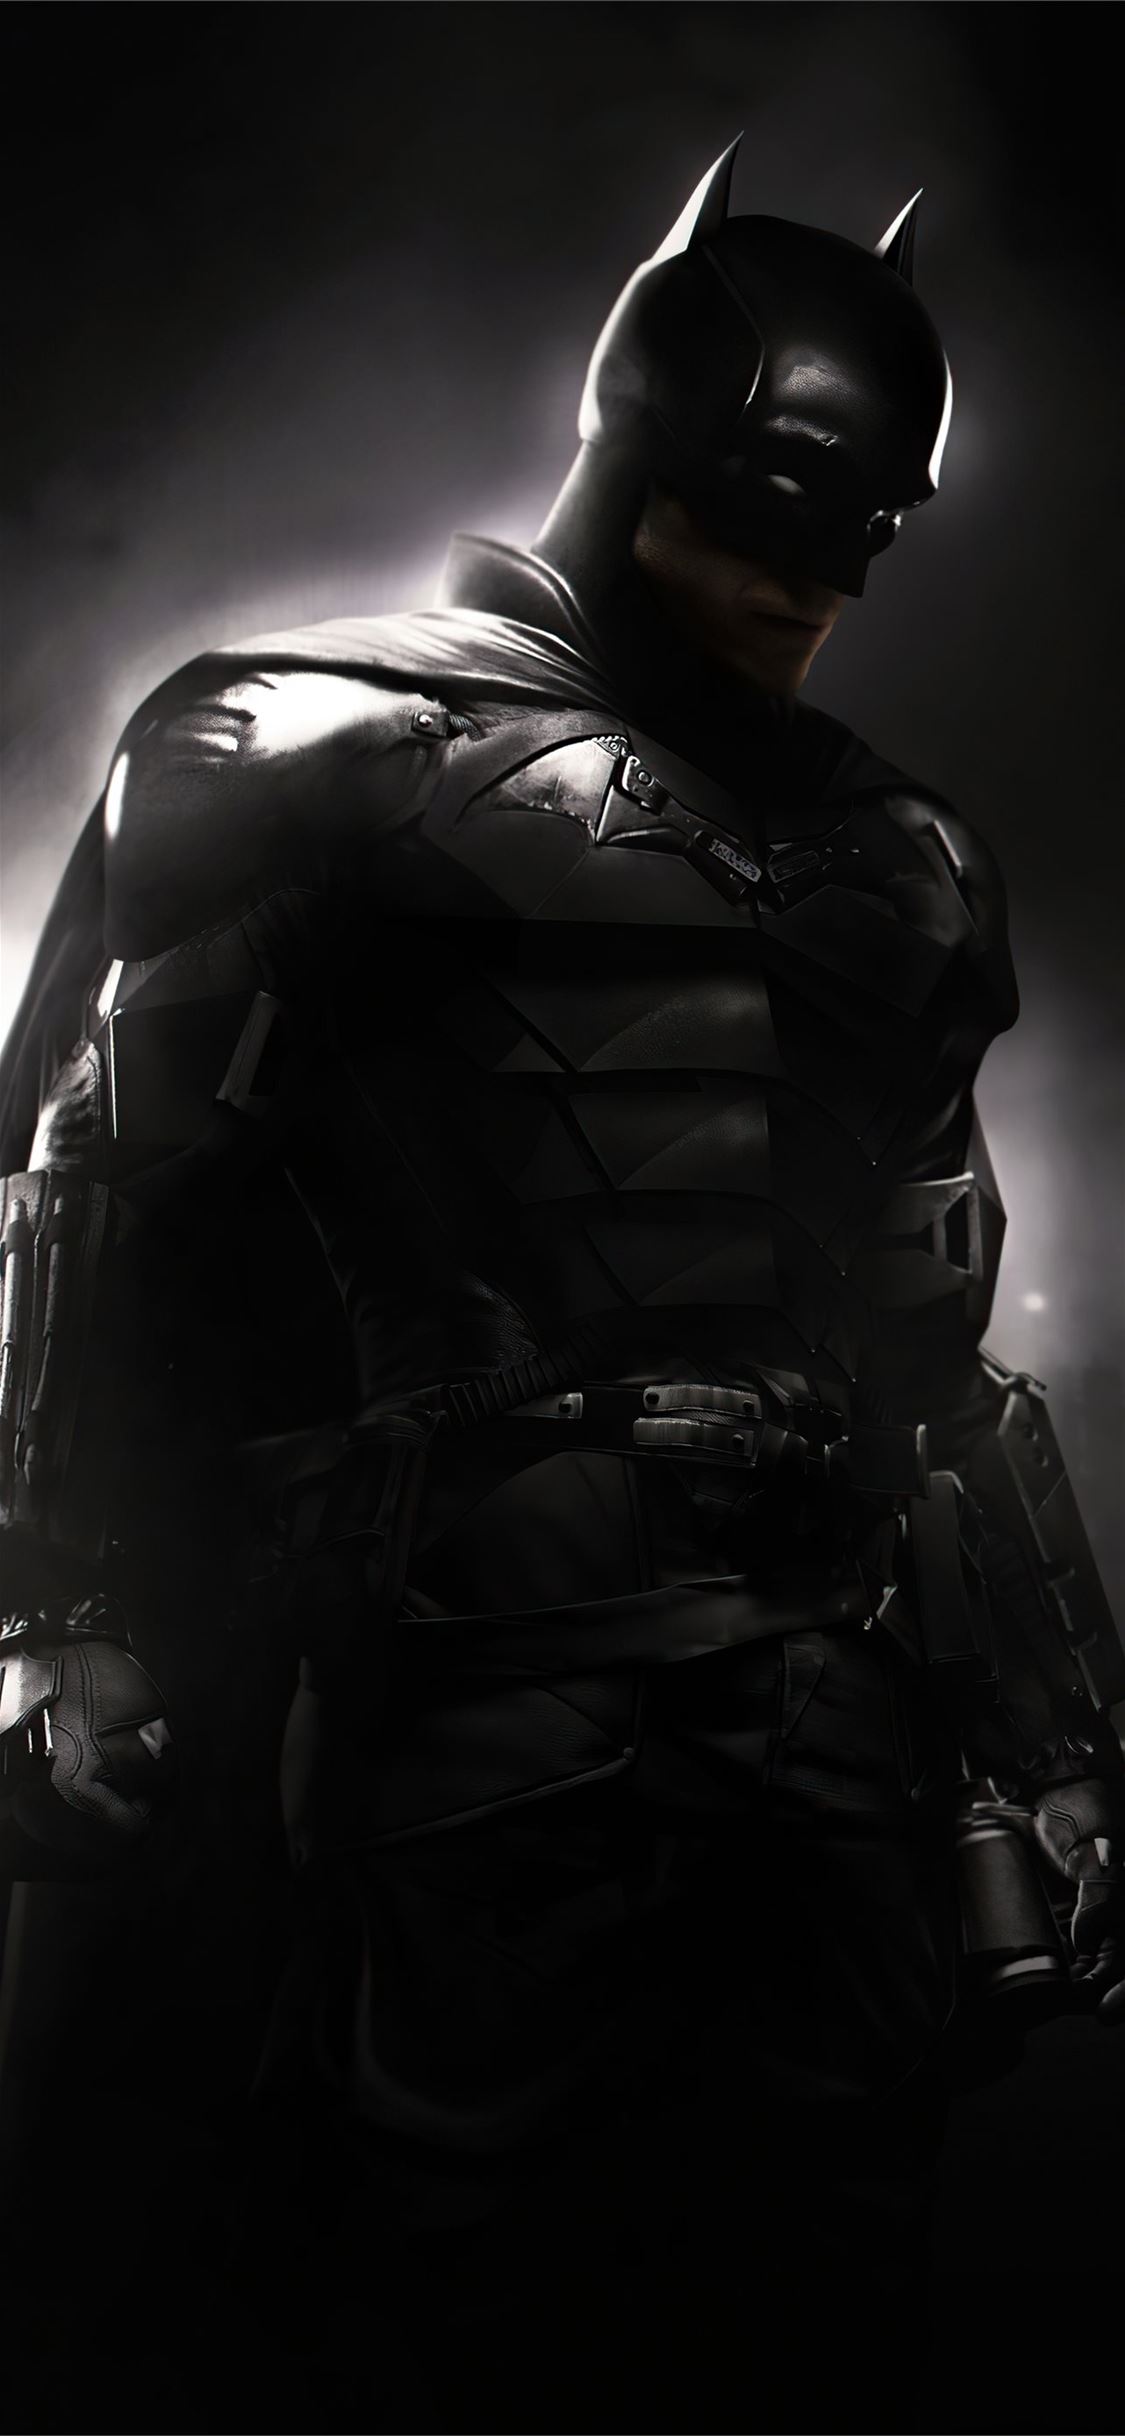 Robert Pattinson The Batman Suit 4k iPhone Wallpaper